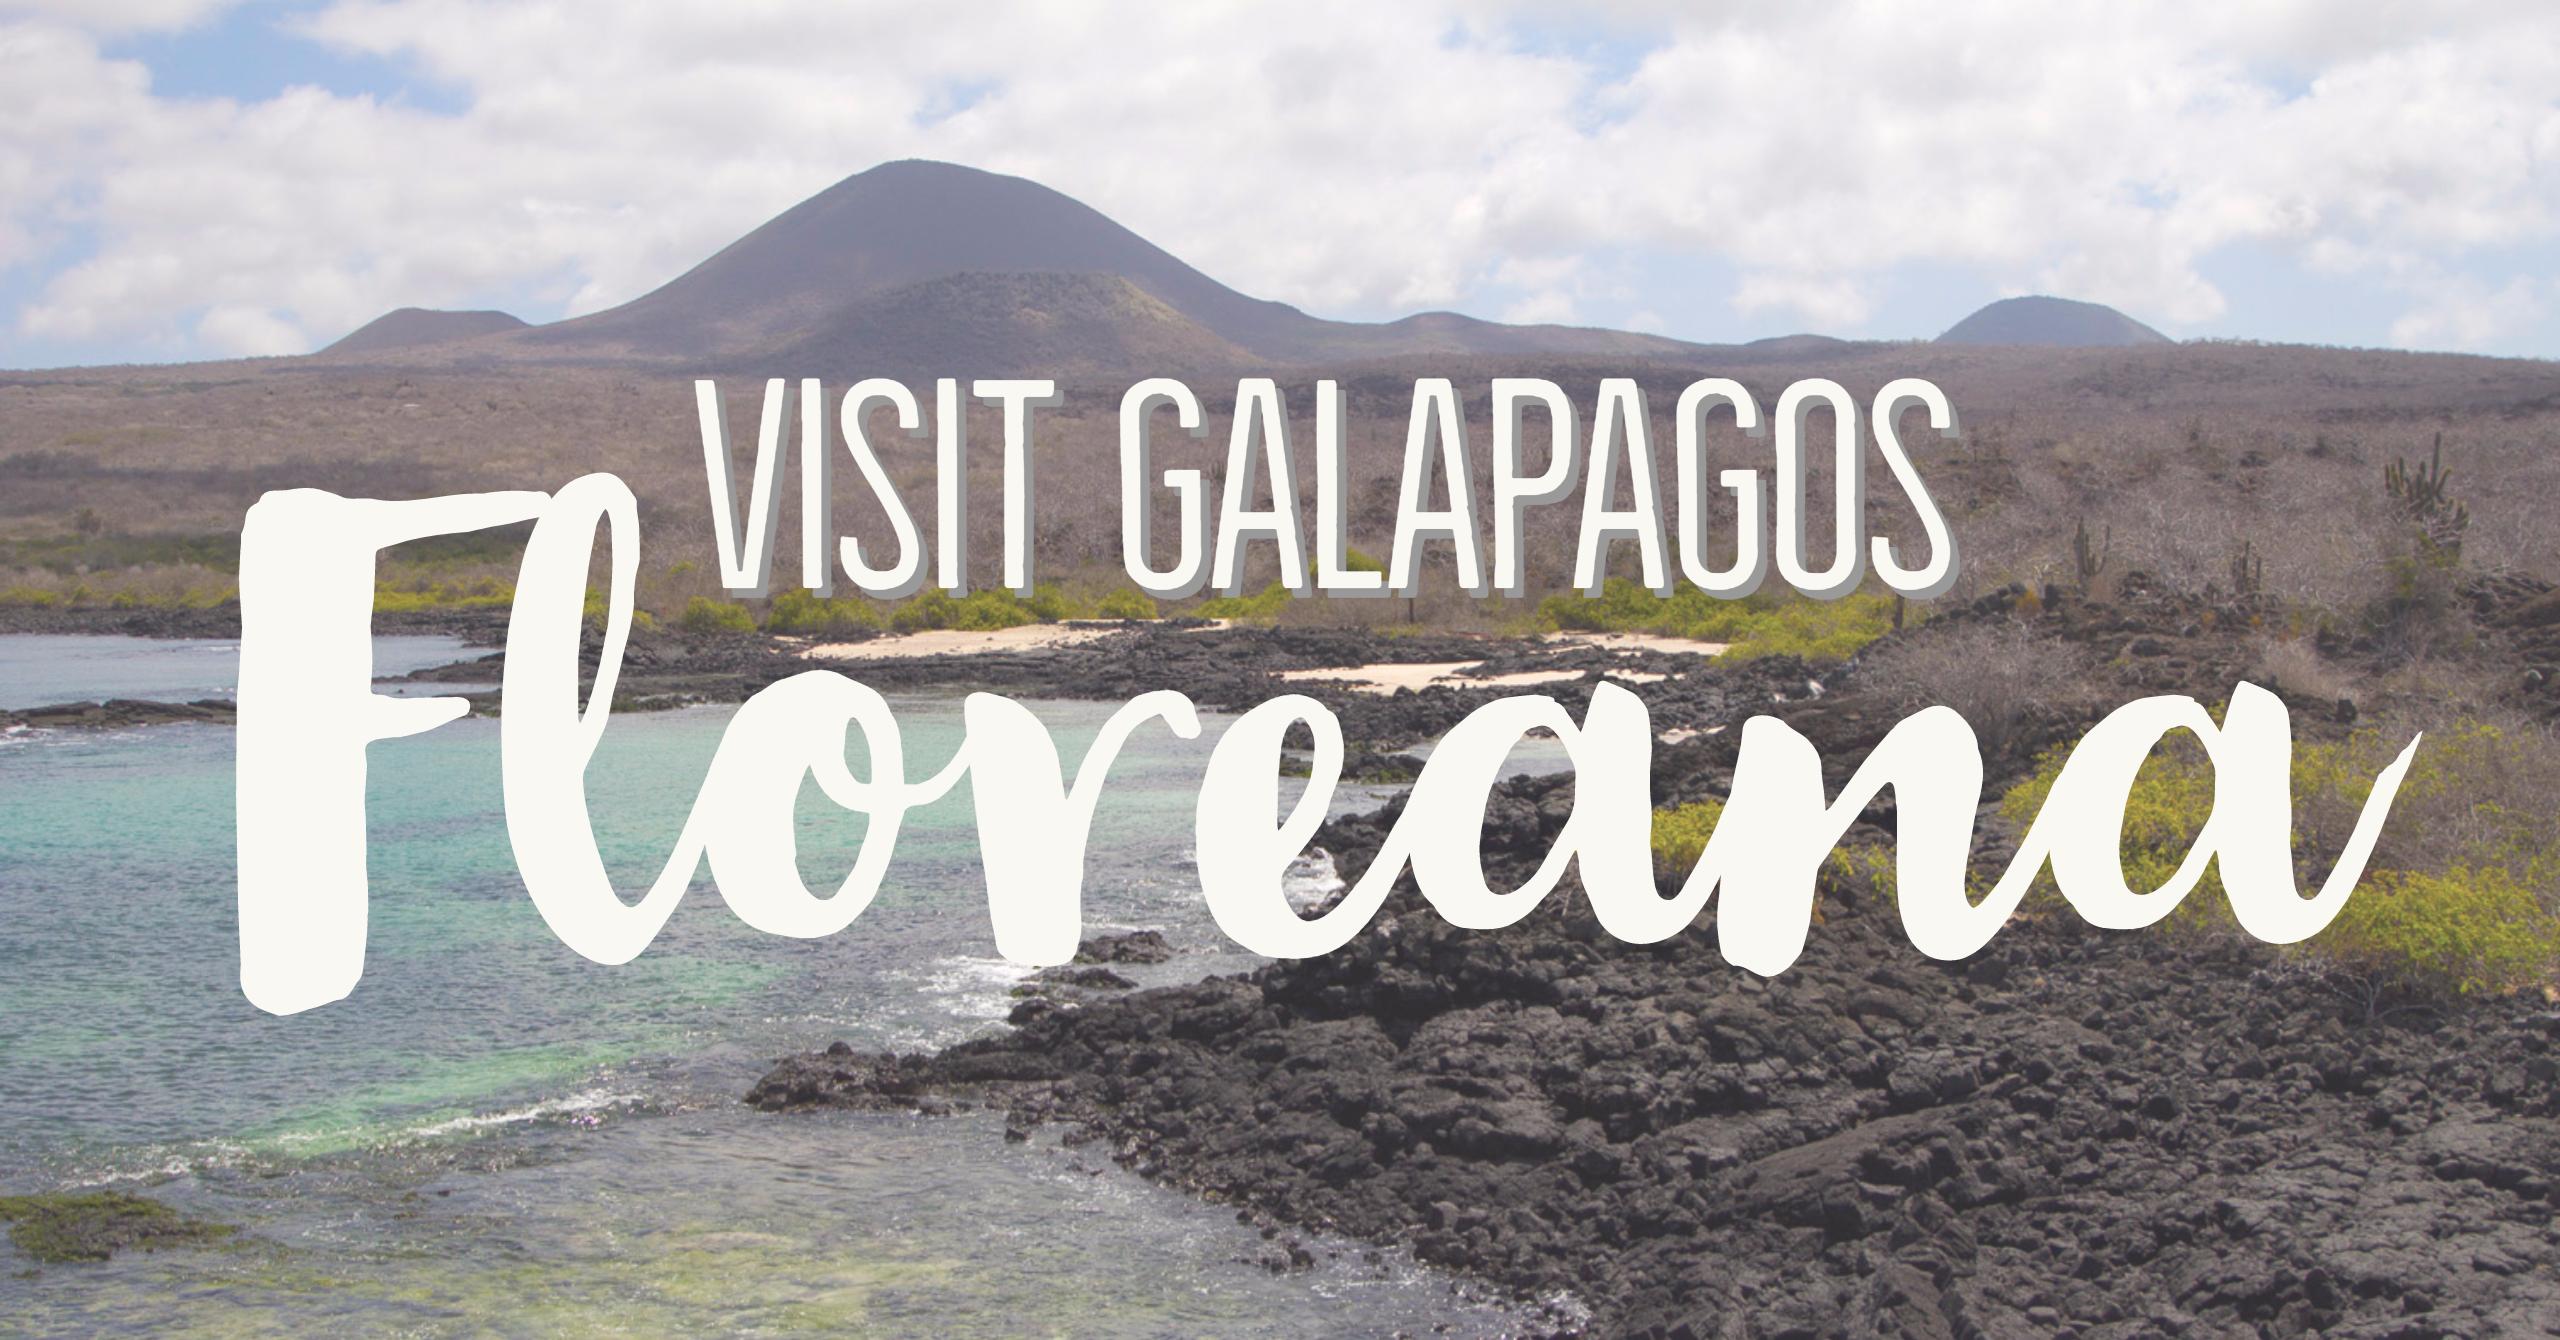 Visit Floreana Island, Galapagos | My Wandering Voyage travel blog